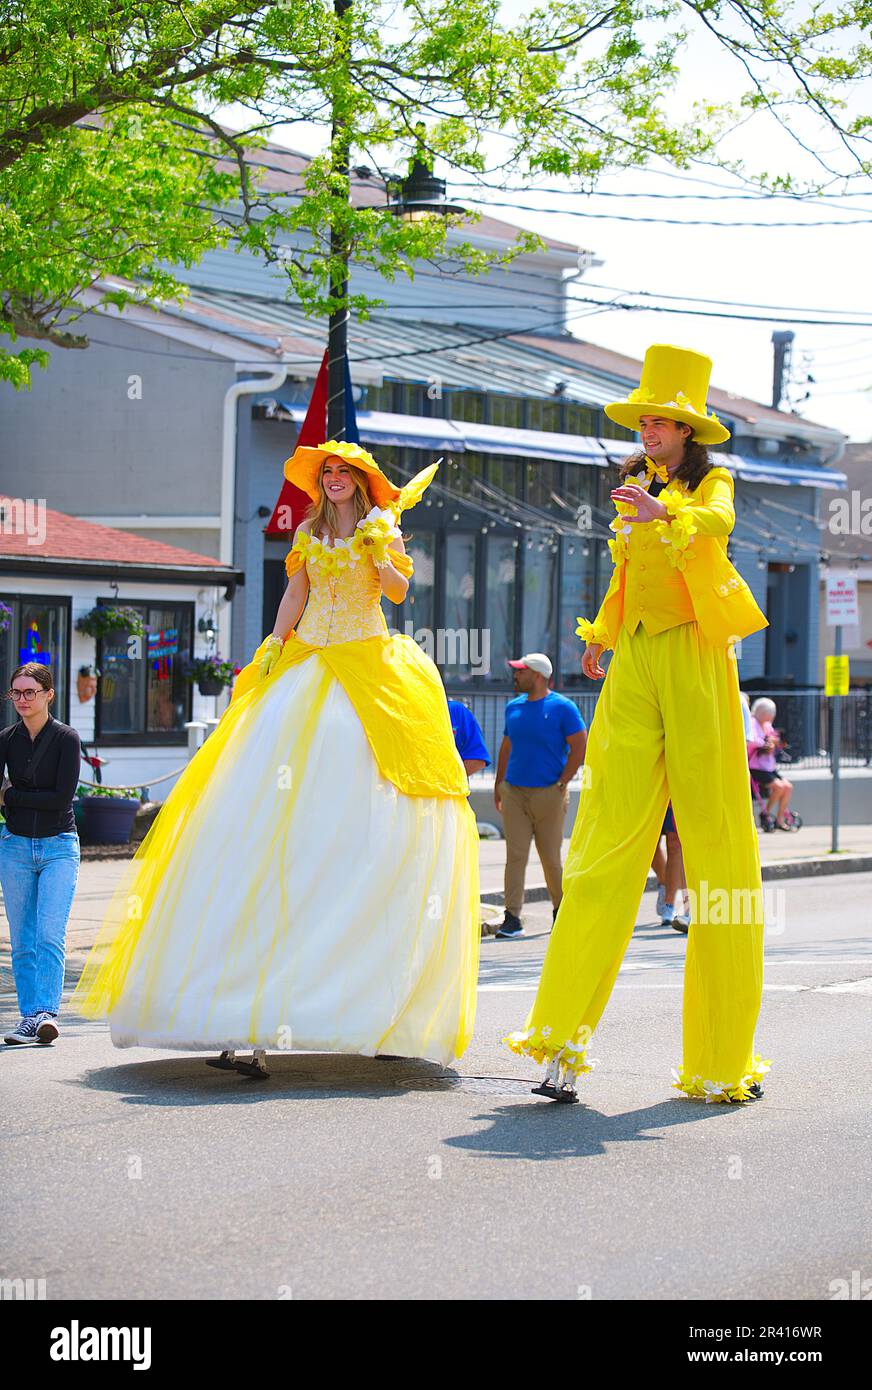 Open Streets - Hyannis, Massachusetts, USA. Street performers on stilts along Main Street Stock Photo